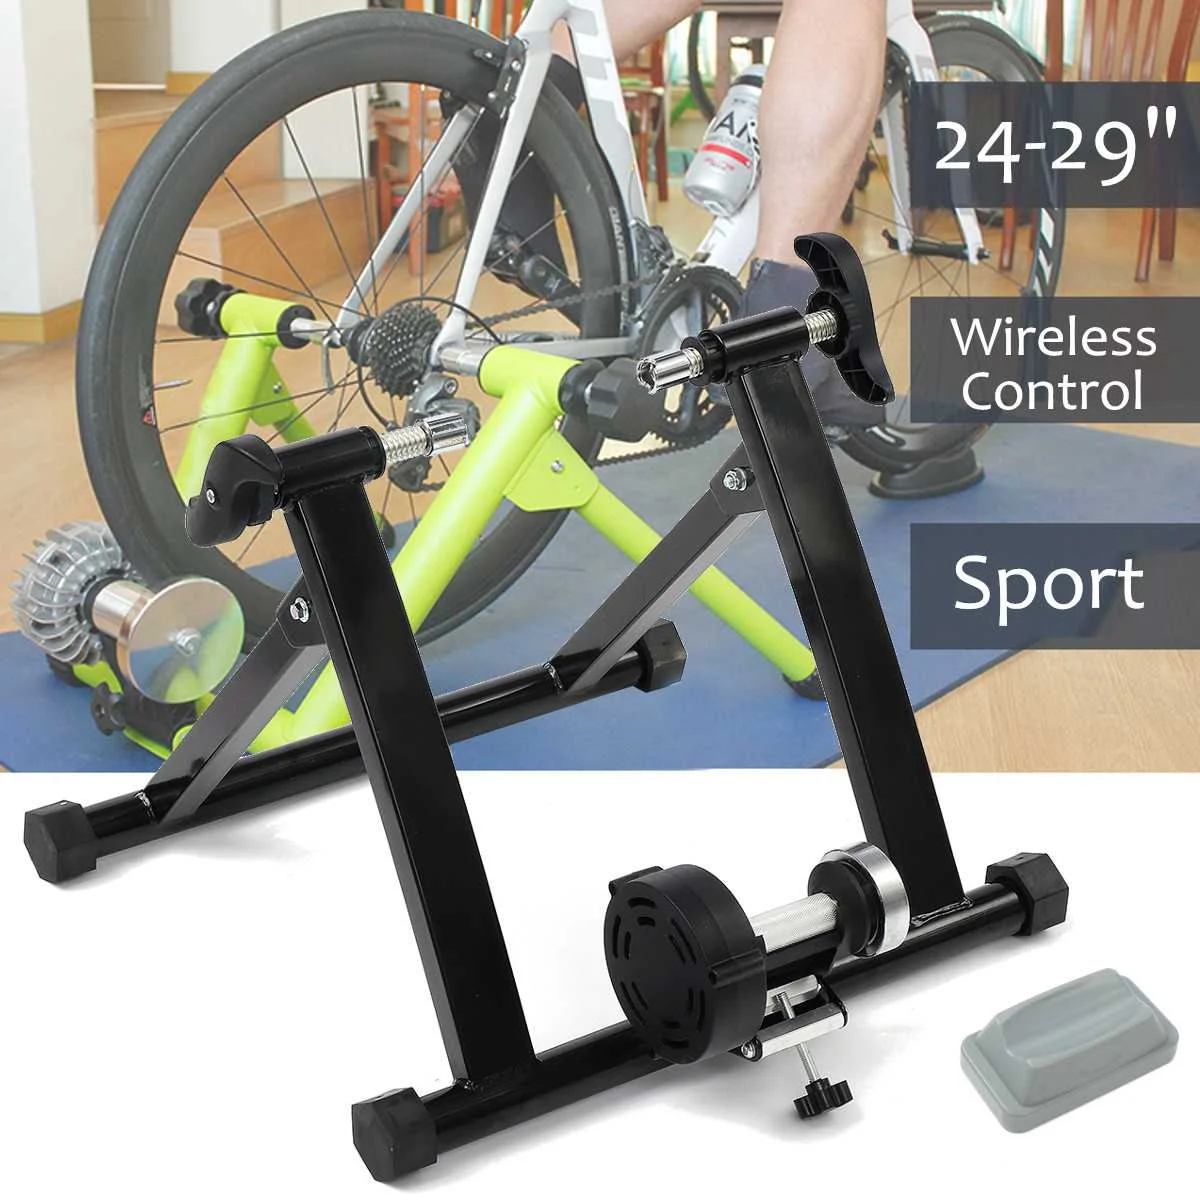 Indoor Bicycle Bike Trainer 4-29 Inch Wireless Black Indoor Bicycle Bike Trainer Exercise Fitness Stand